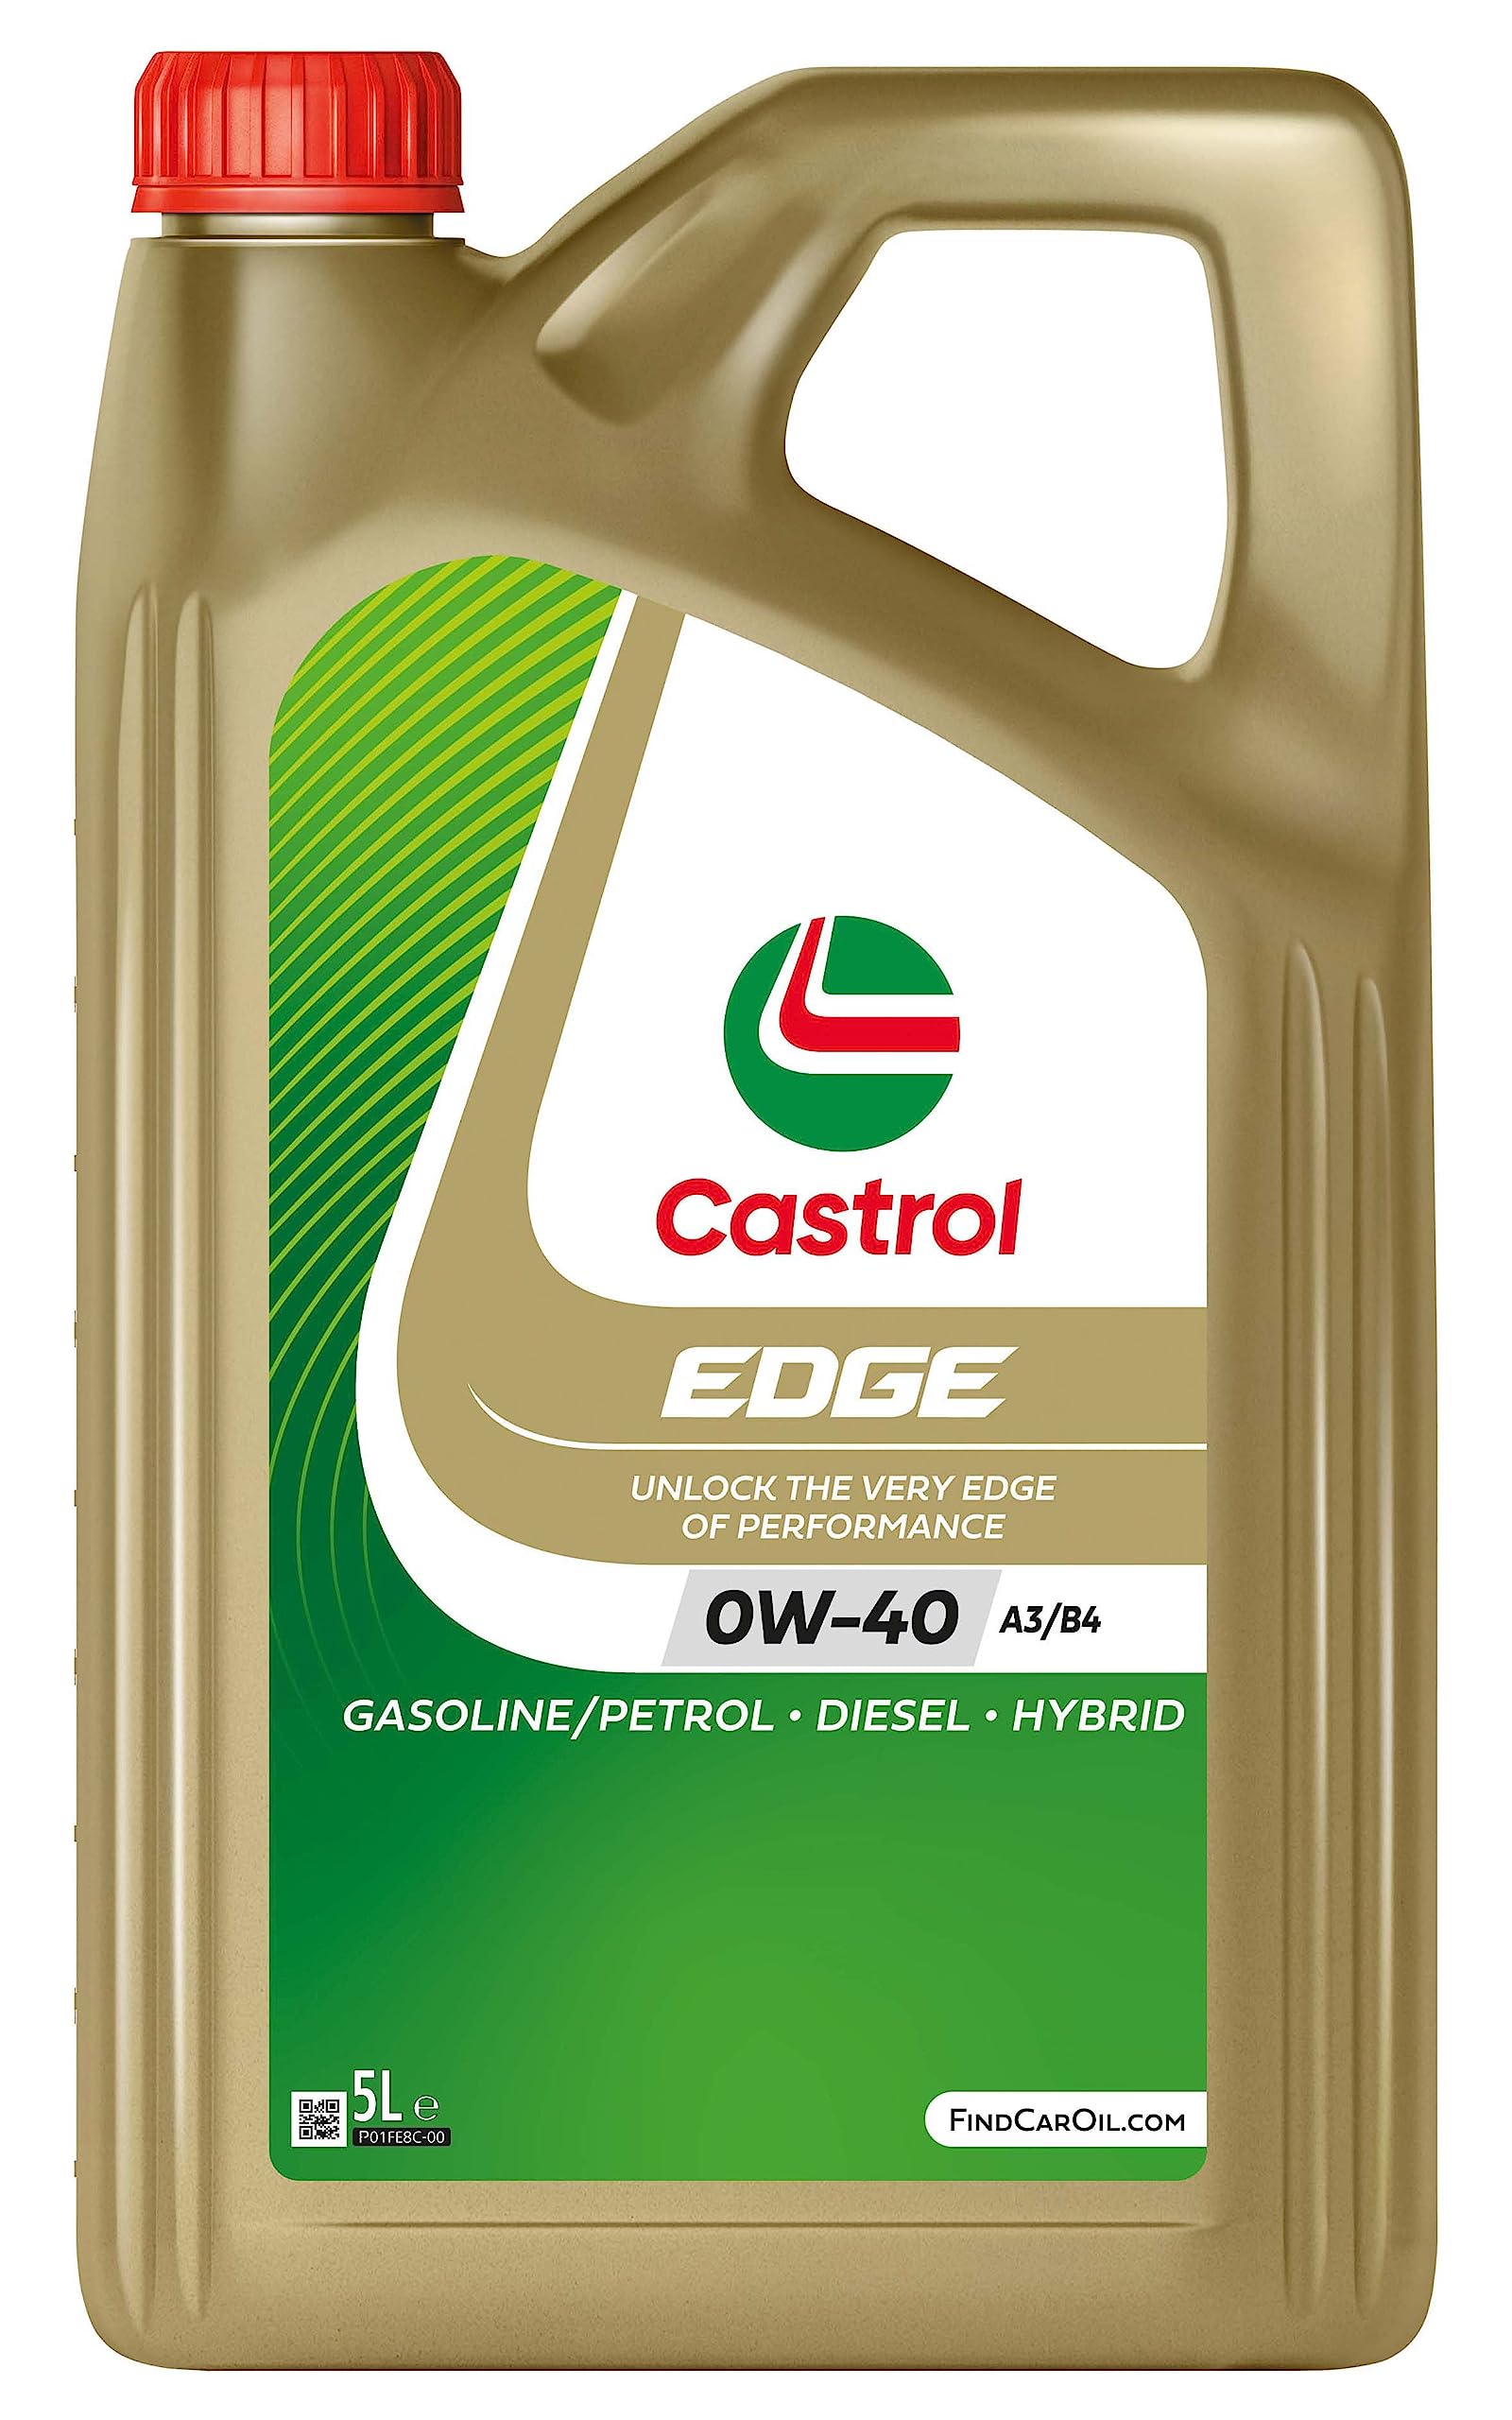 Castrol EDGE 0W-40 A3/B4 Motoröl, 5L von Castrol